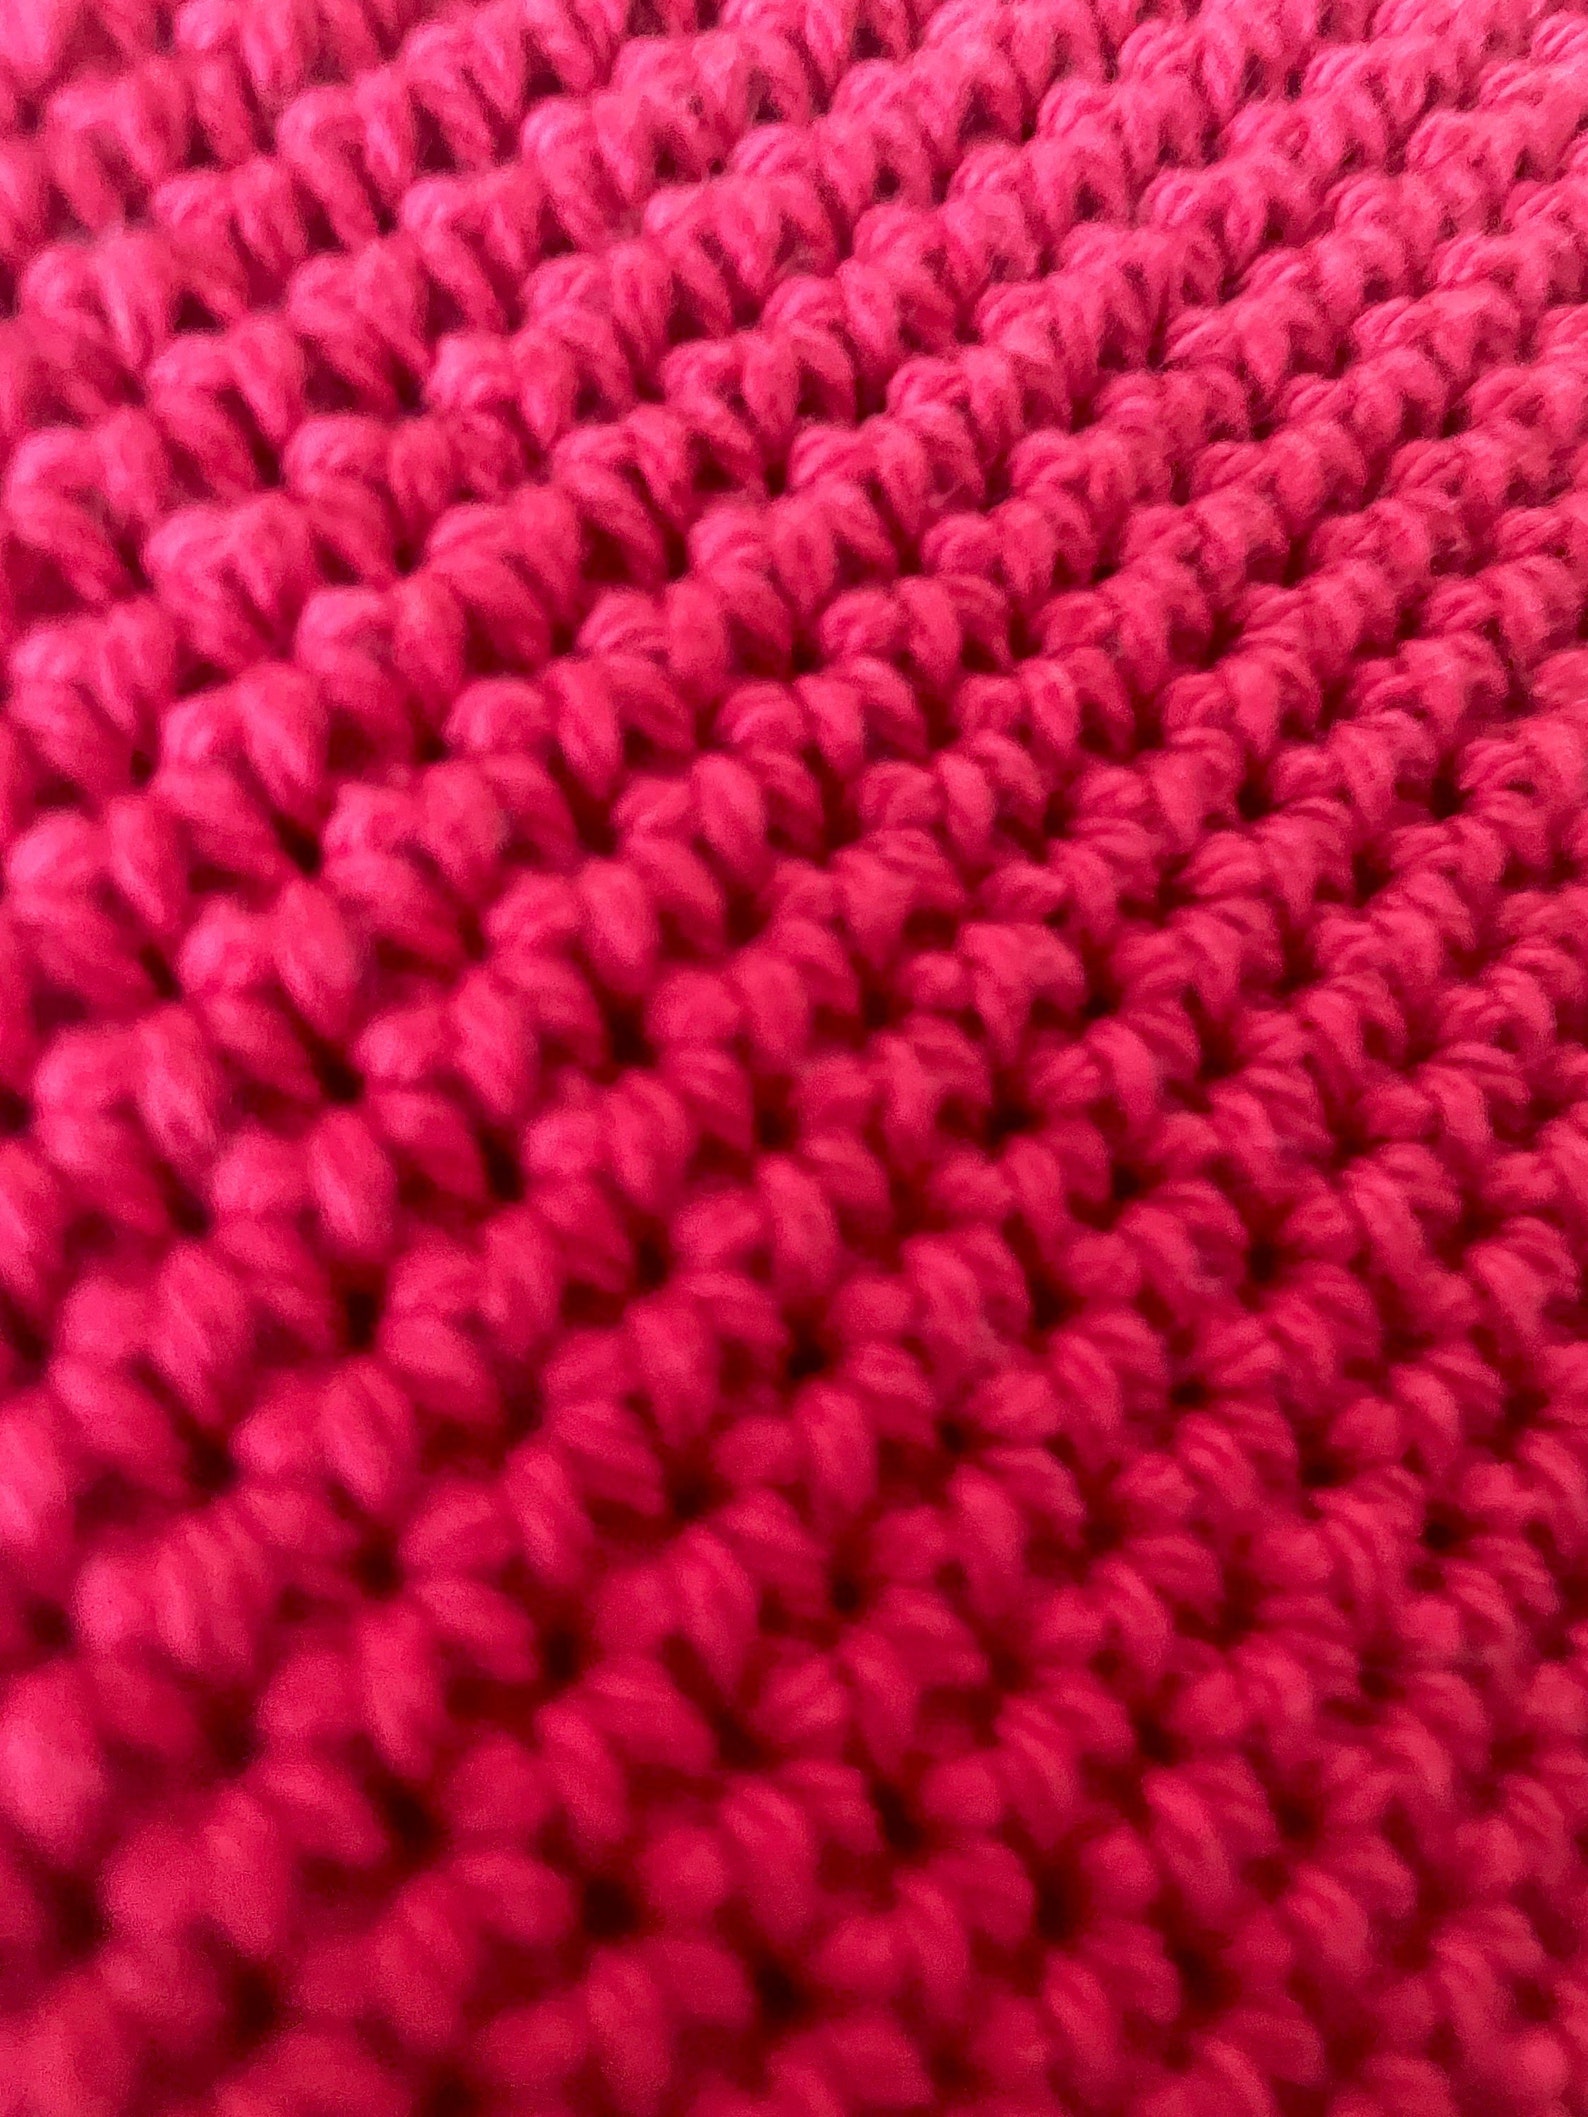 Crochet Cotton Potholders, Crochet Hotpads, Double Layer Potholder ...